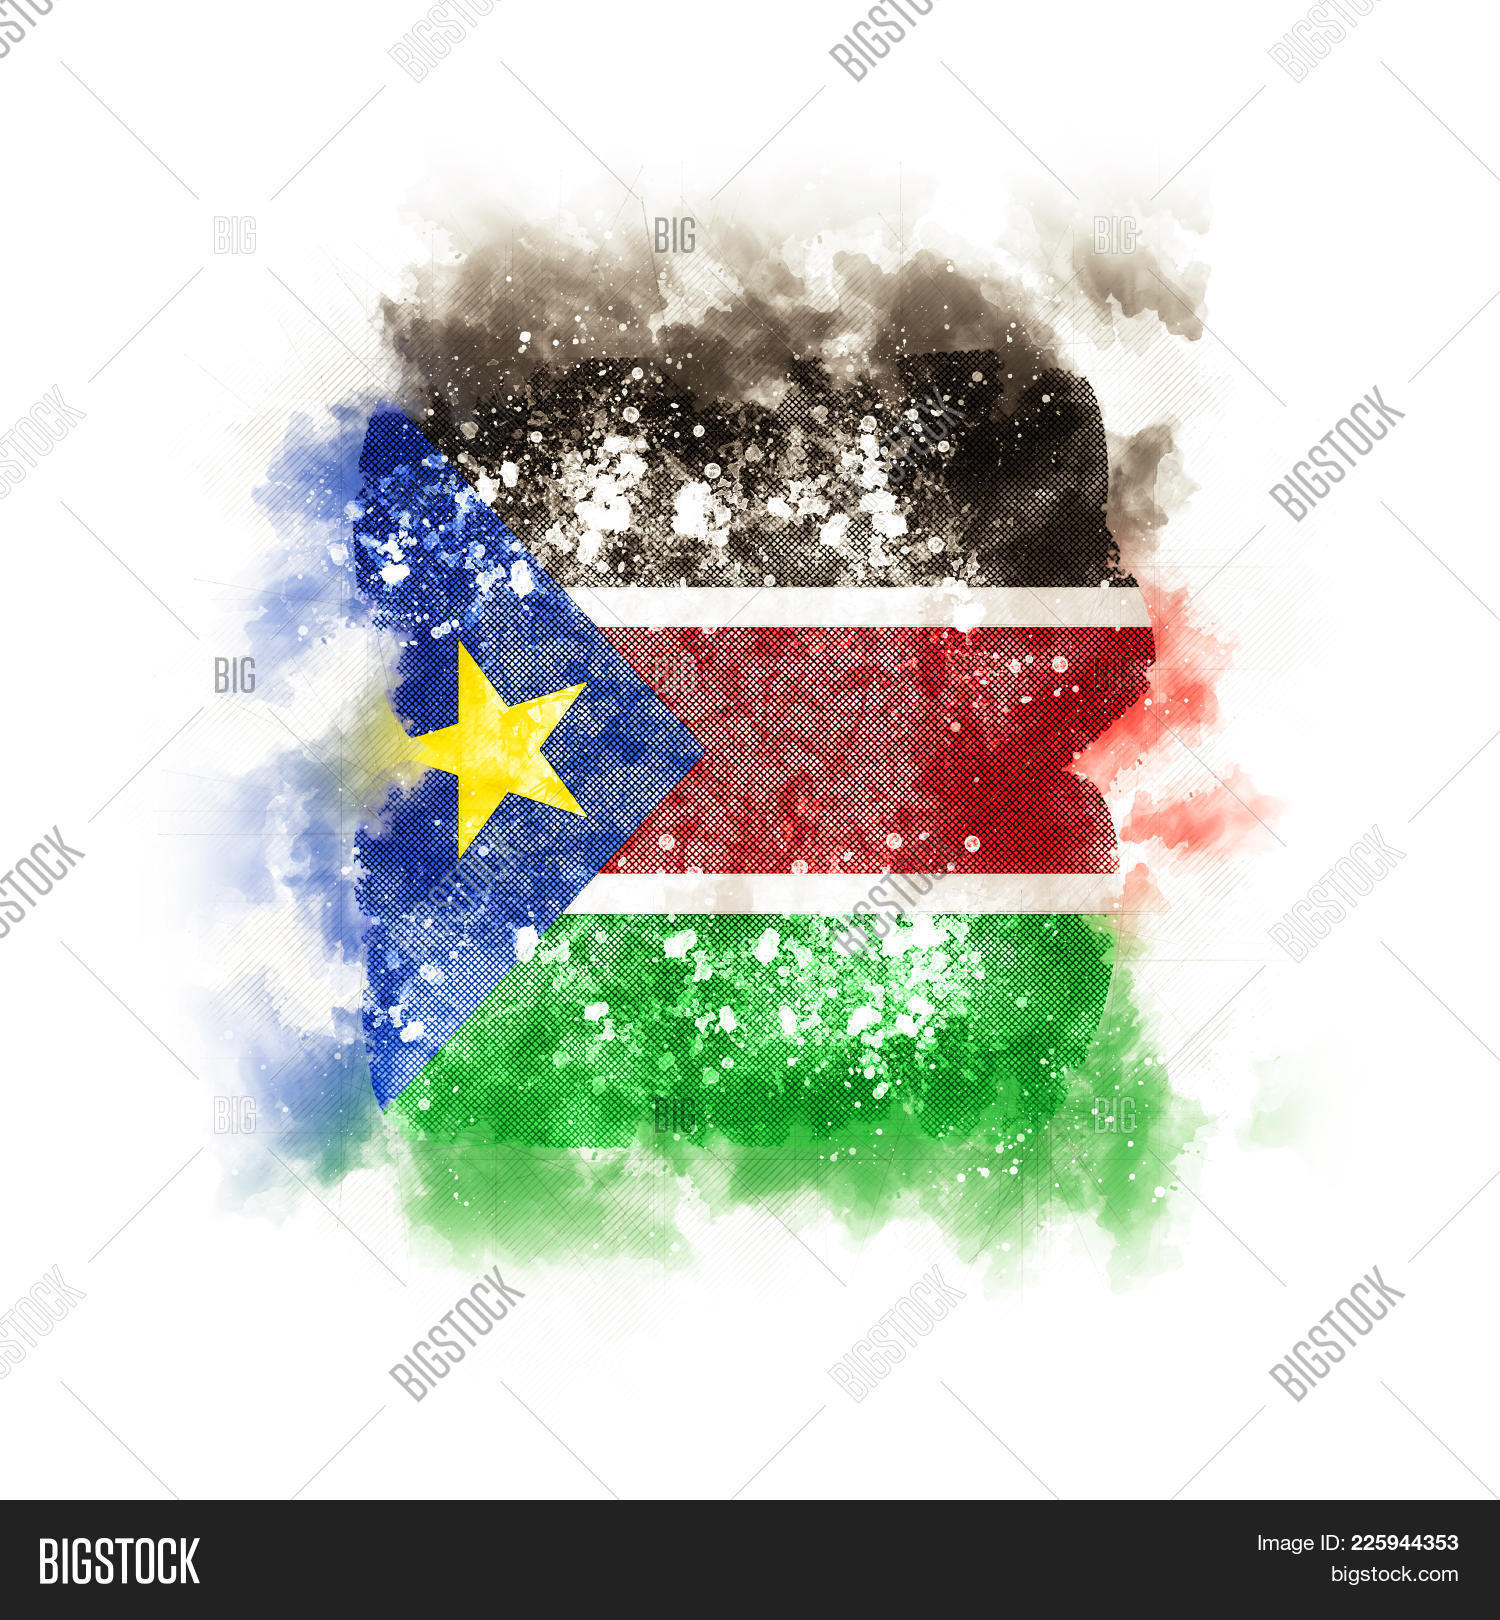 Square Grunge Flag South Sudan Image & Photo | Bigstock